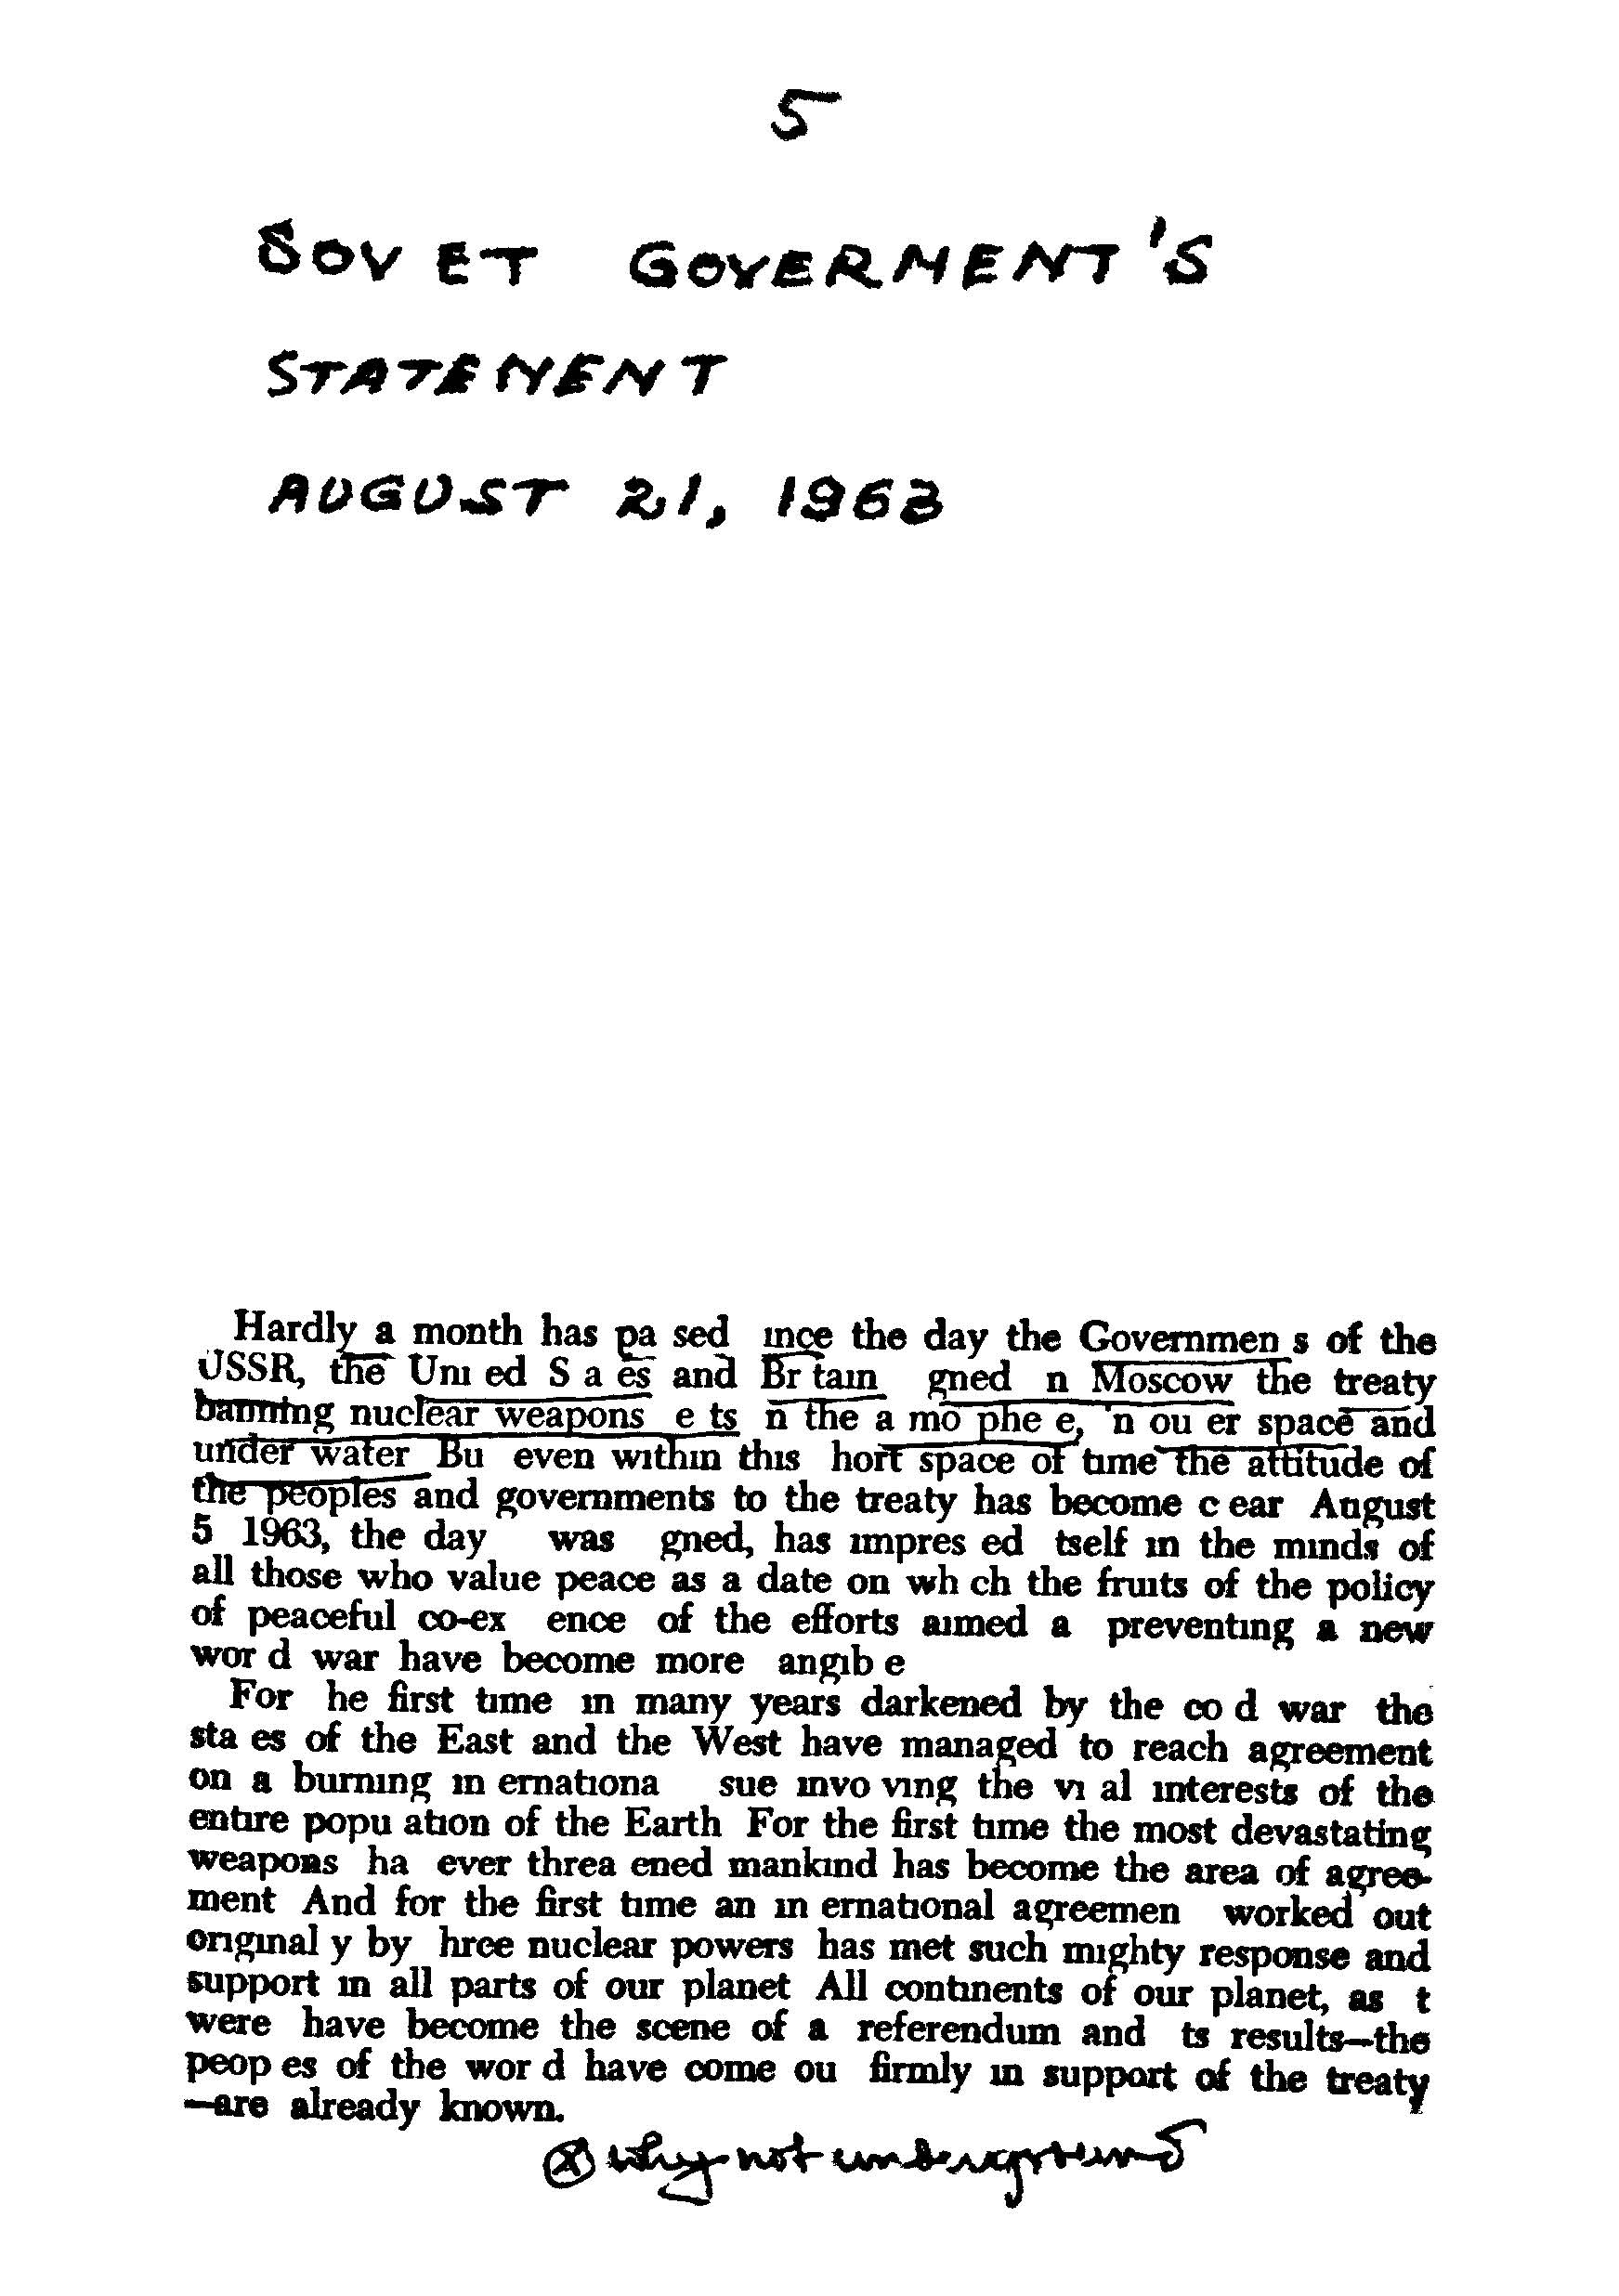 Sovet Goverment's Statement August 21,1963